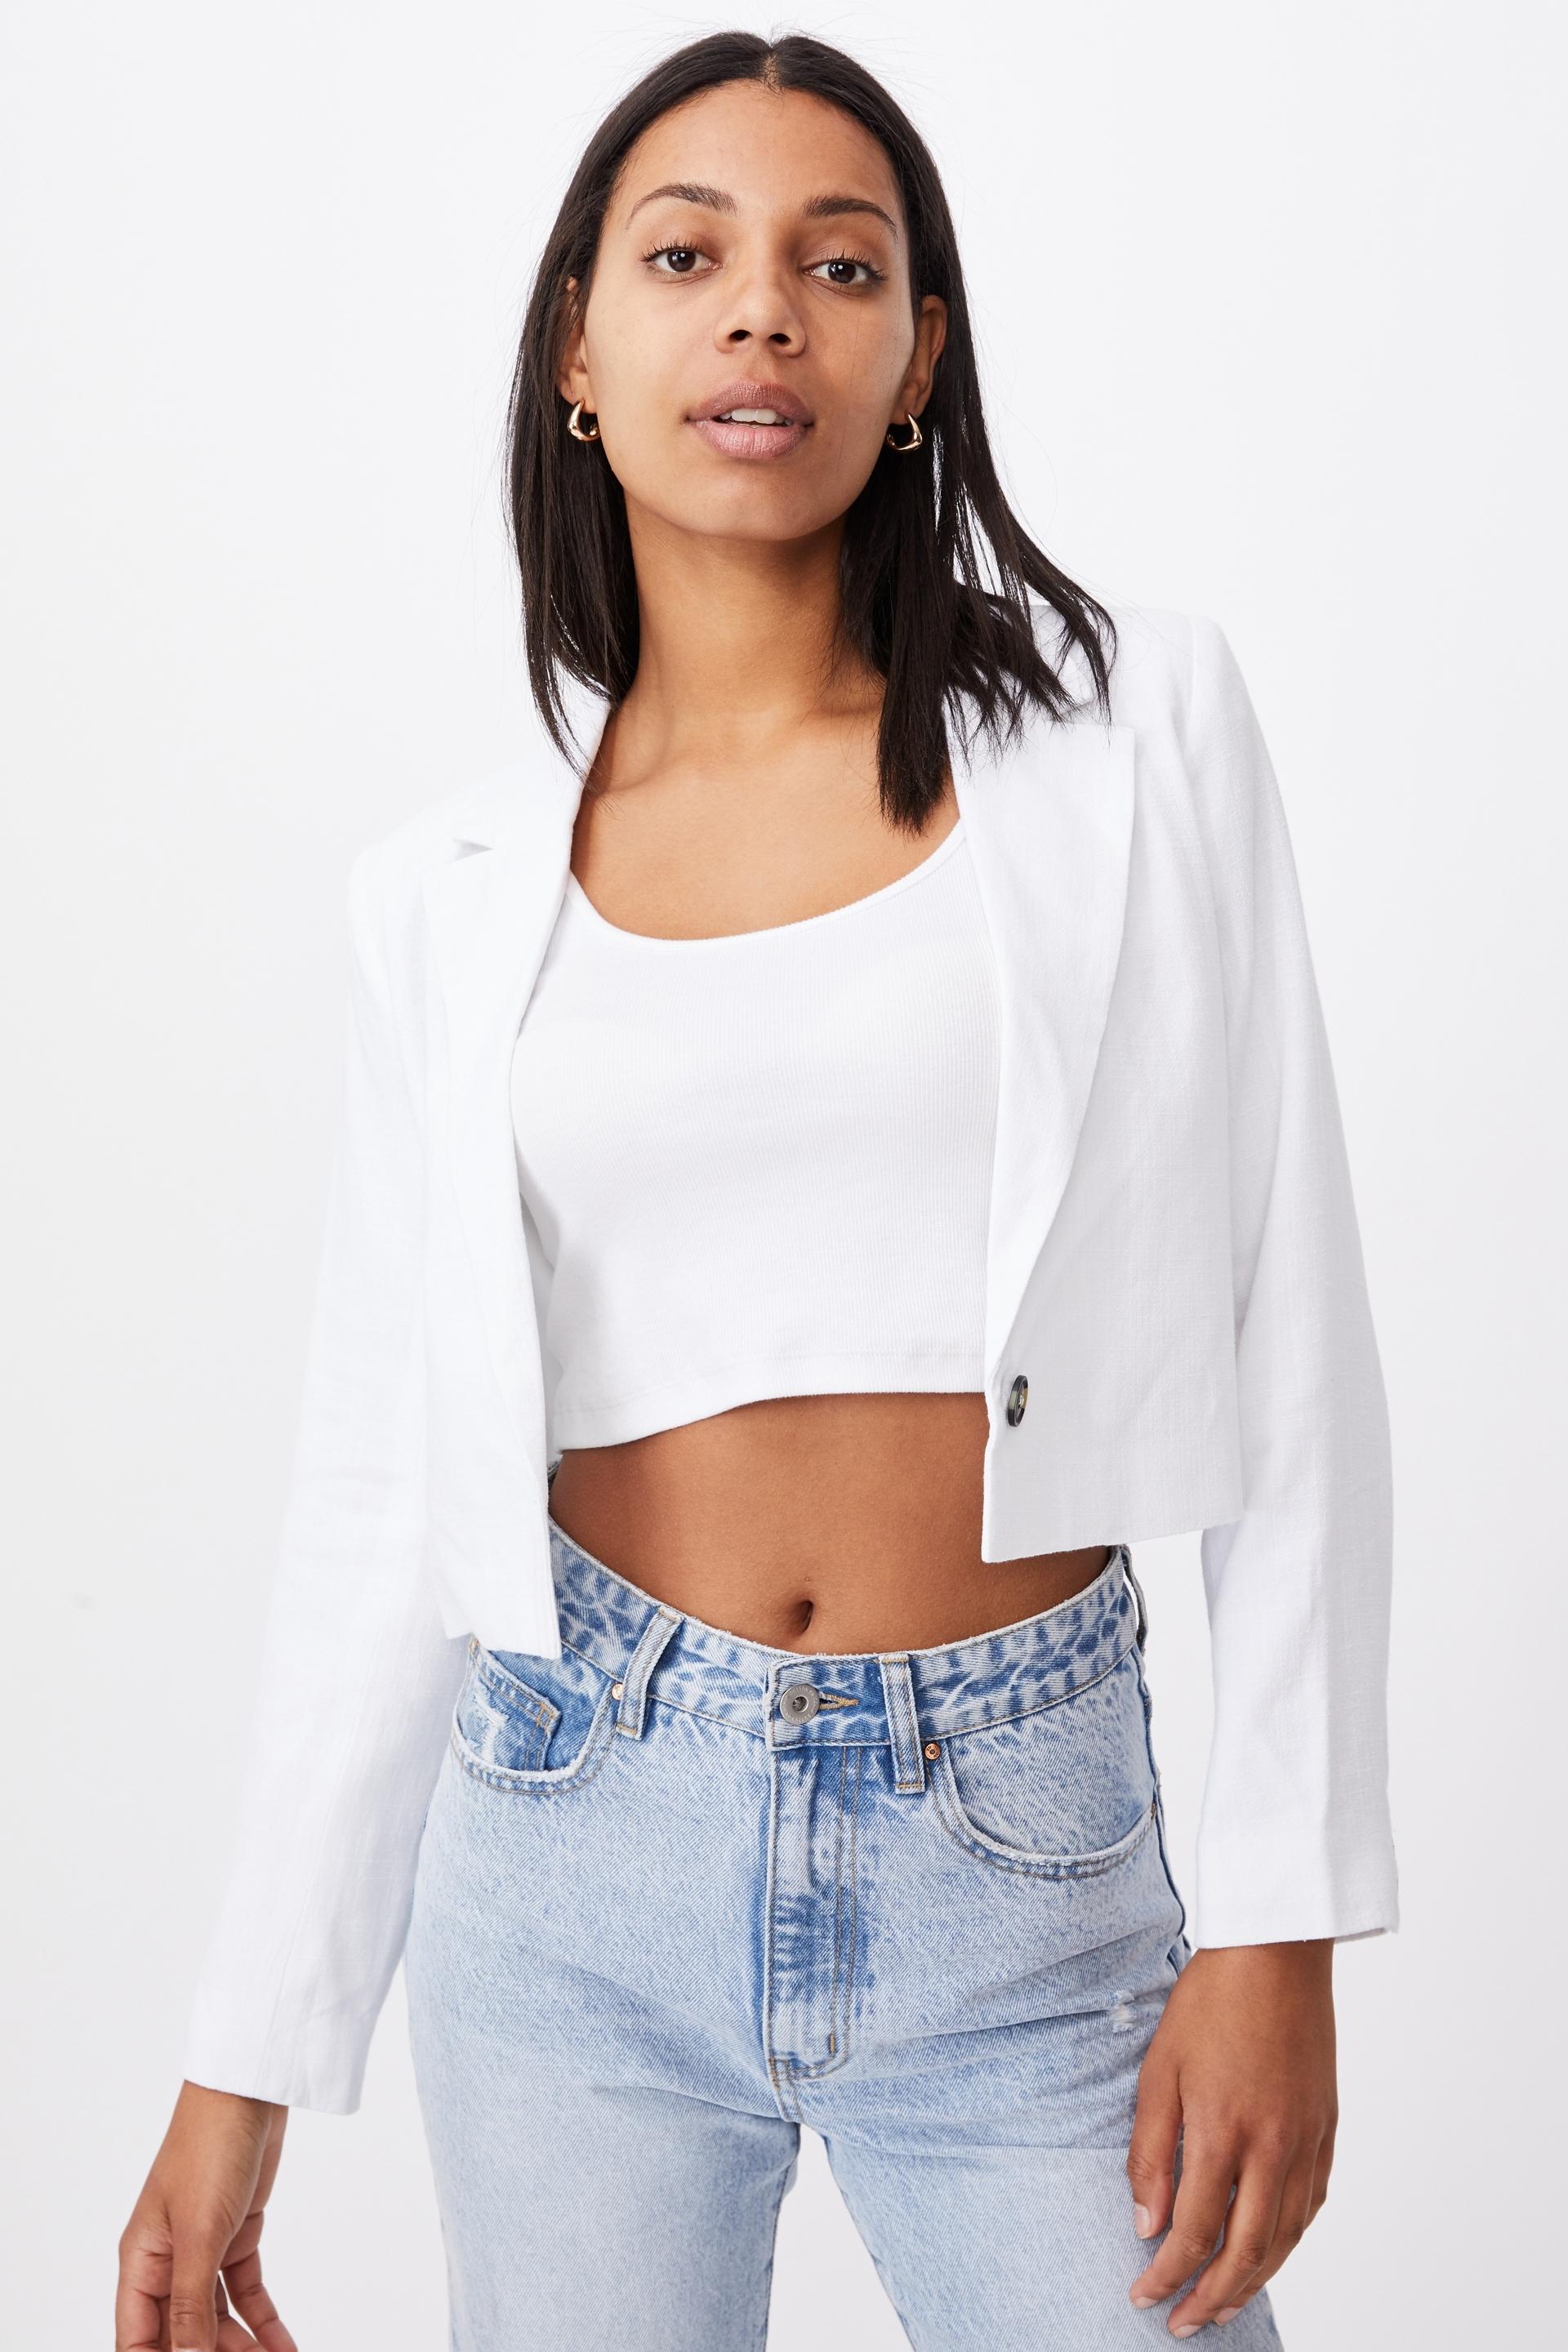 Cropped blazer - white Cotton On Jackets | Superbalist.com